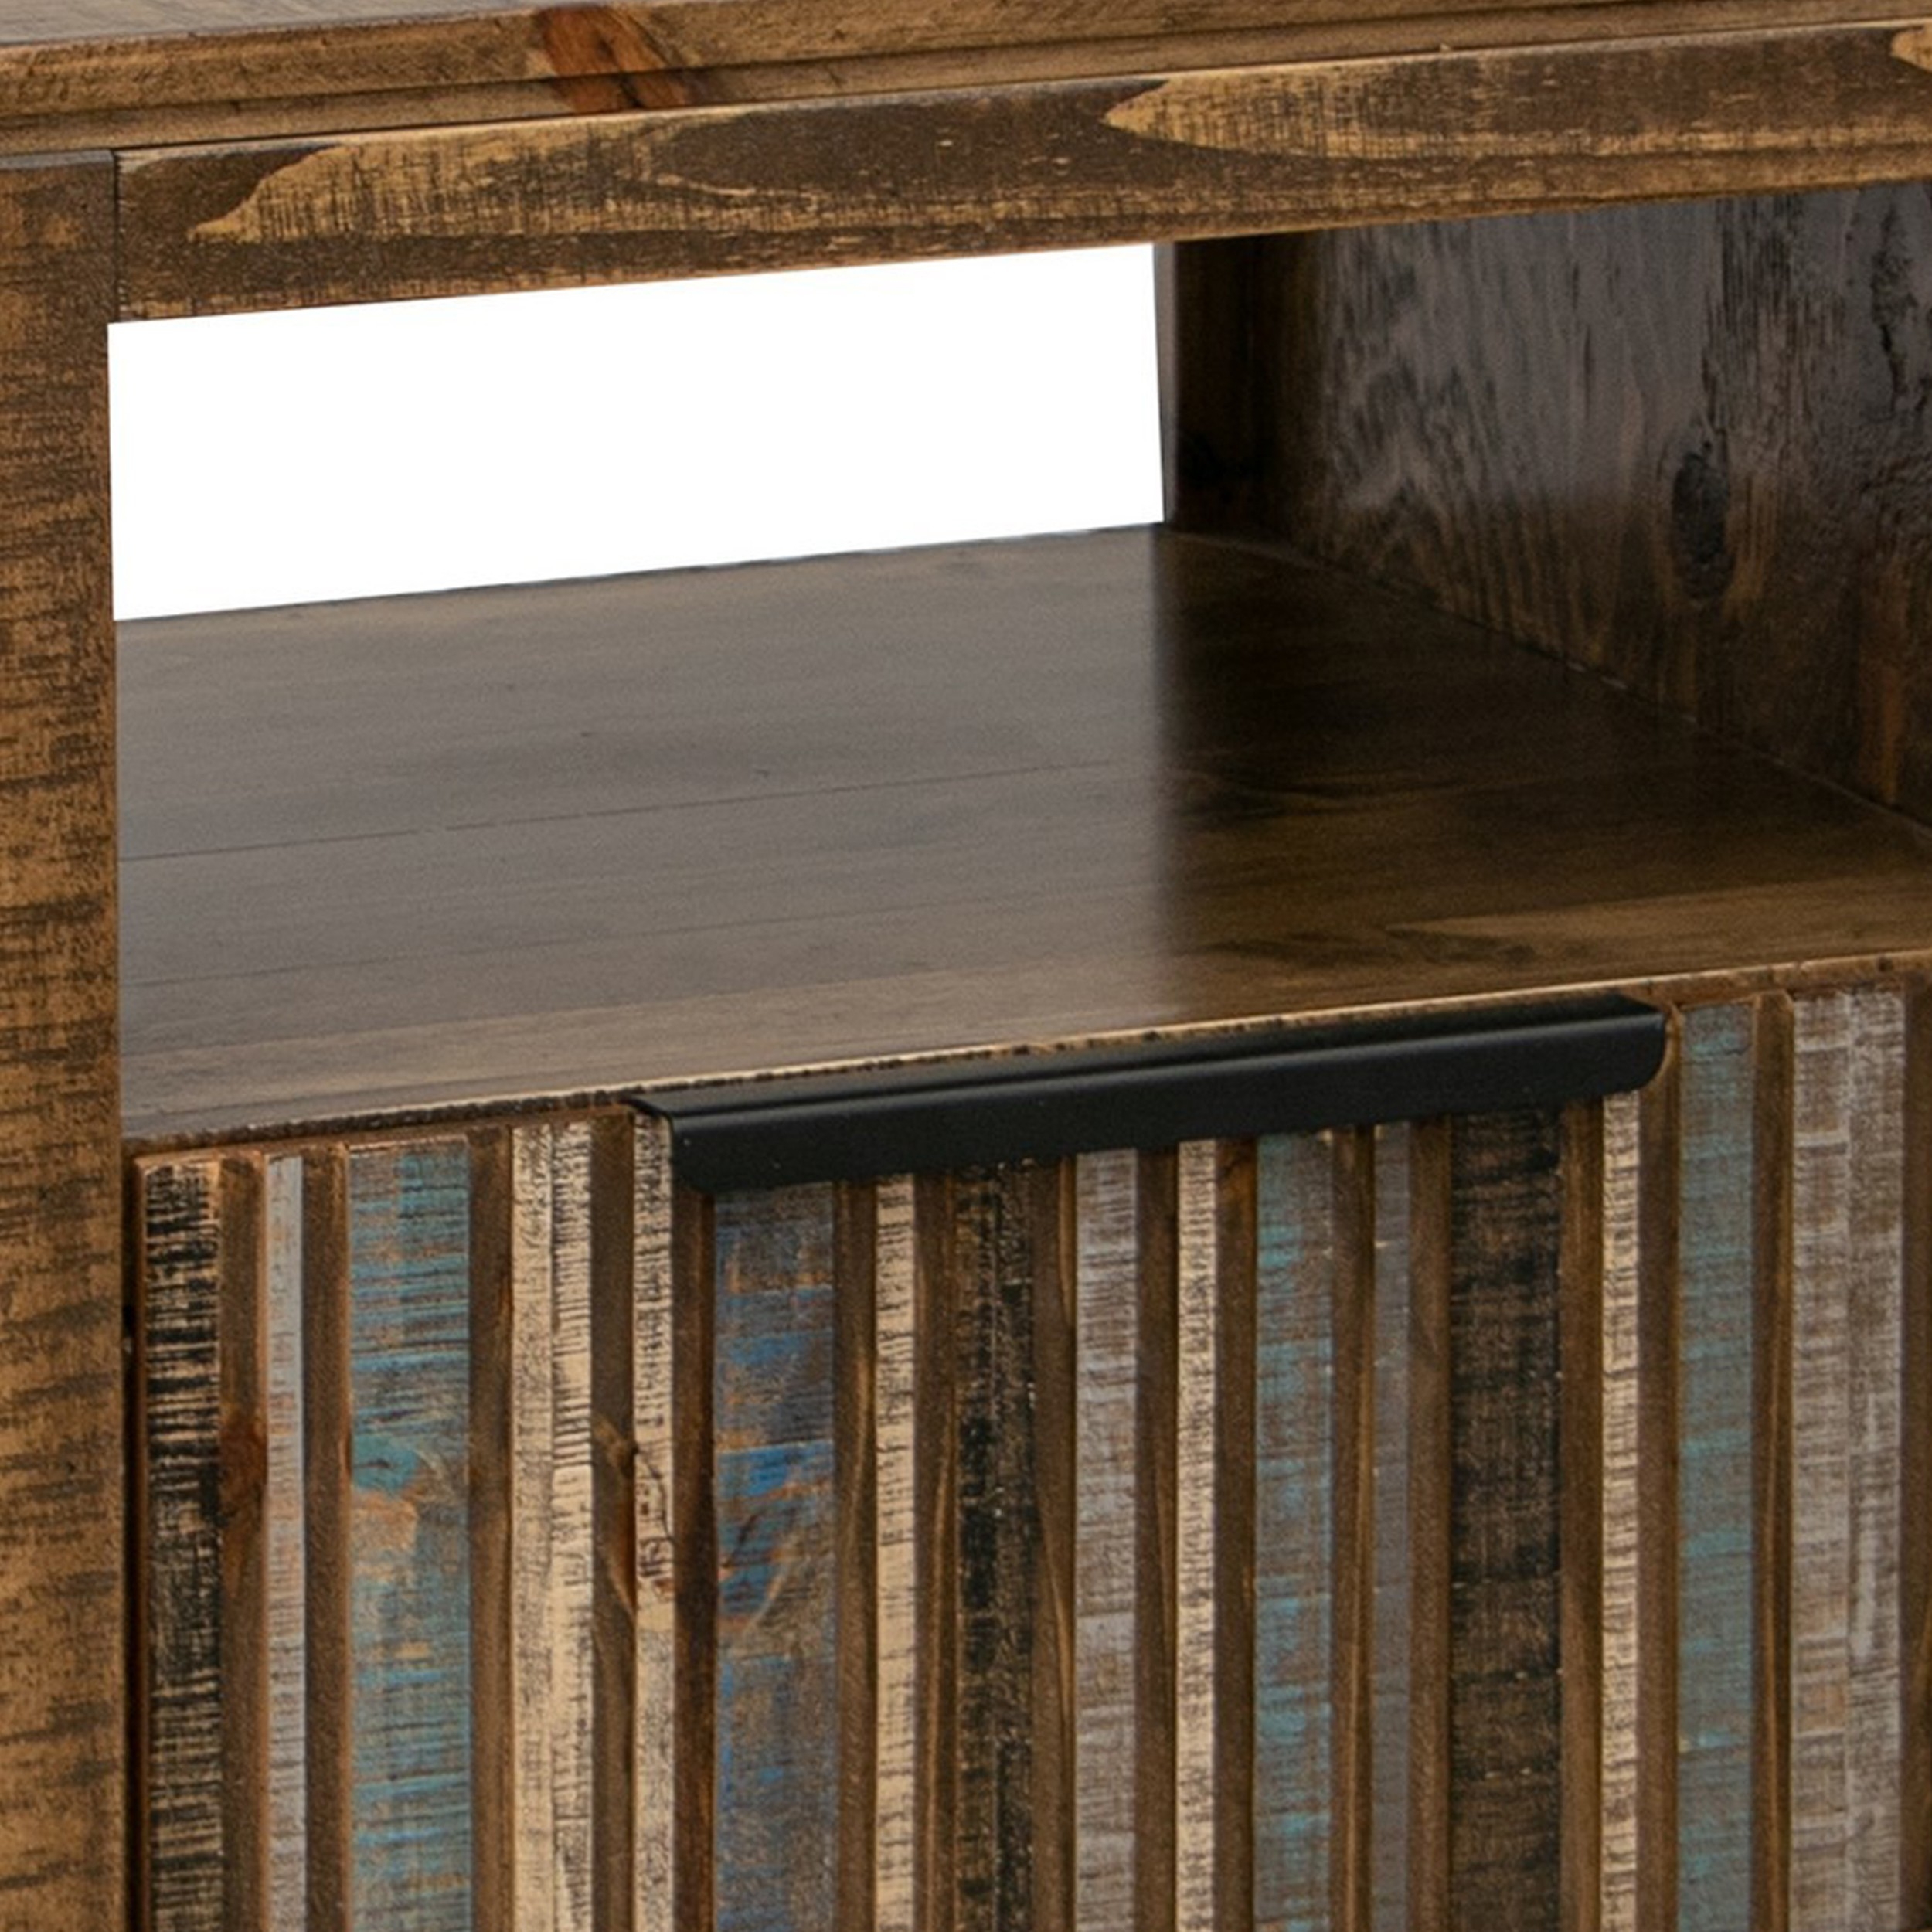 Texu 26 Inch Side End Table, Pine Wood, 1 Drawer, Open Shelf, Brown, Blue - Saltoro Sherpi